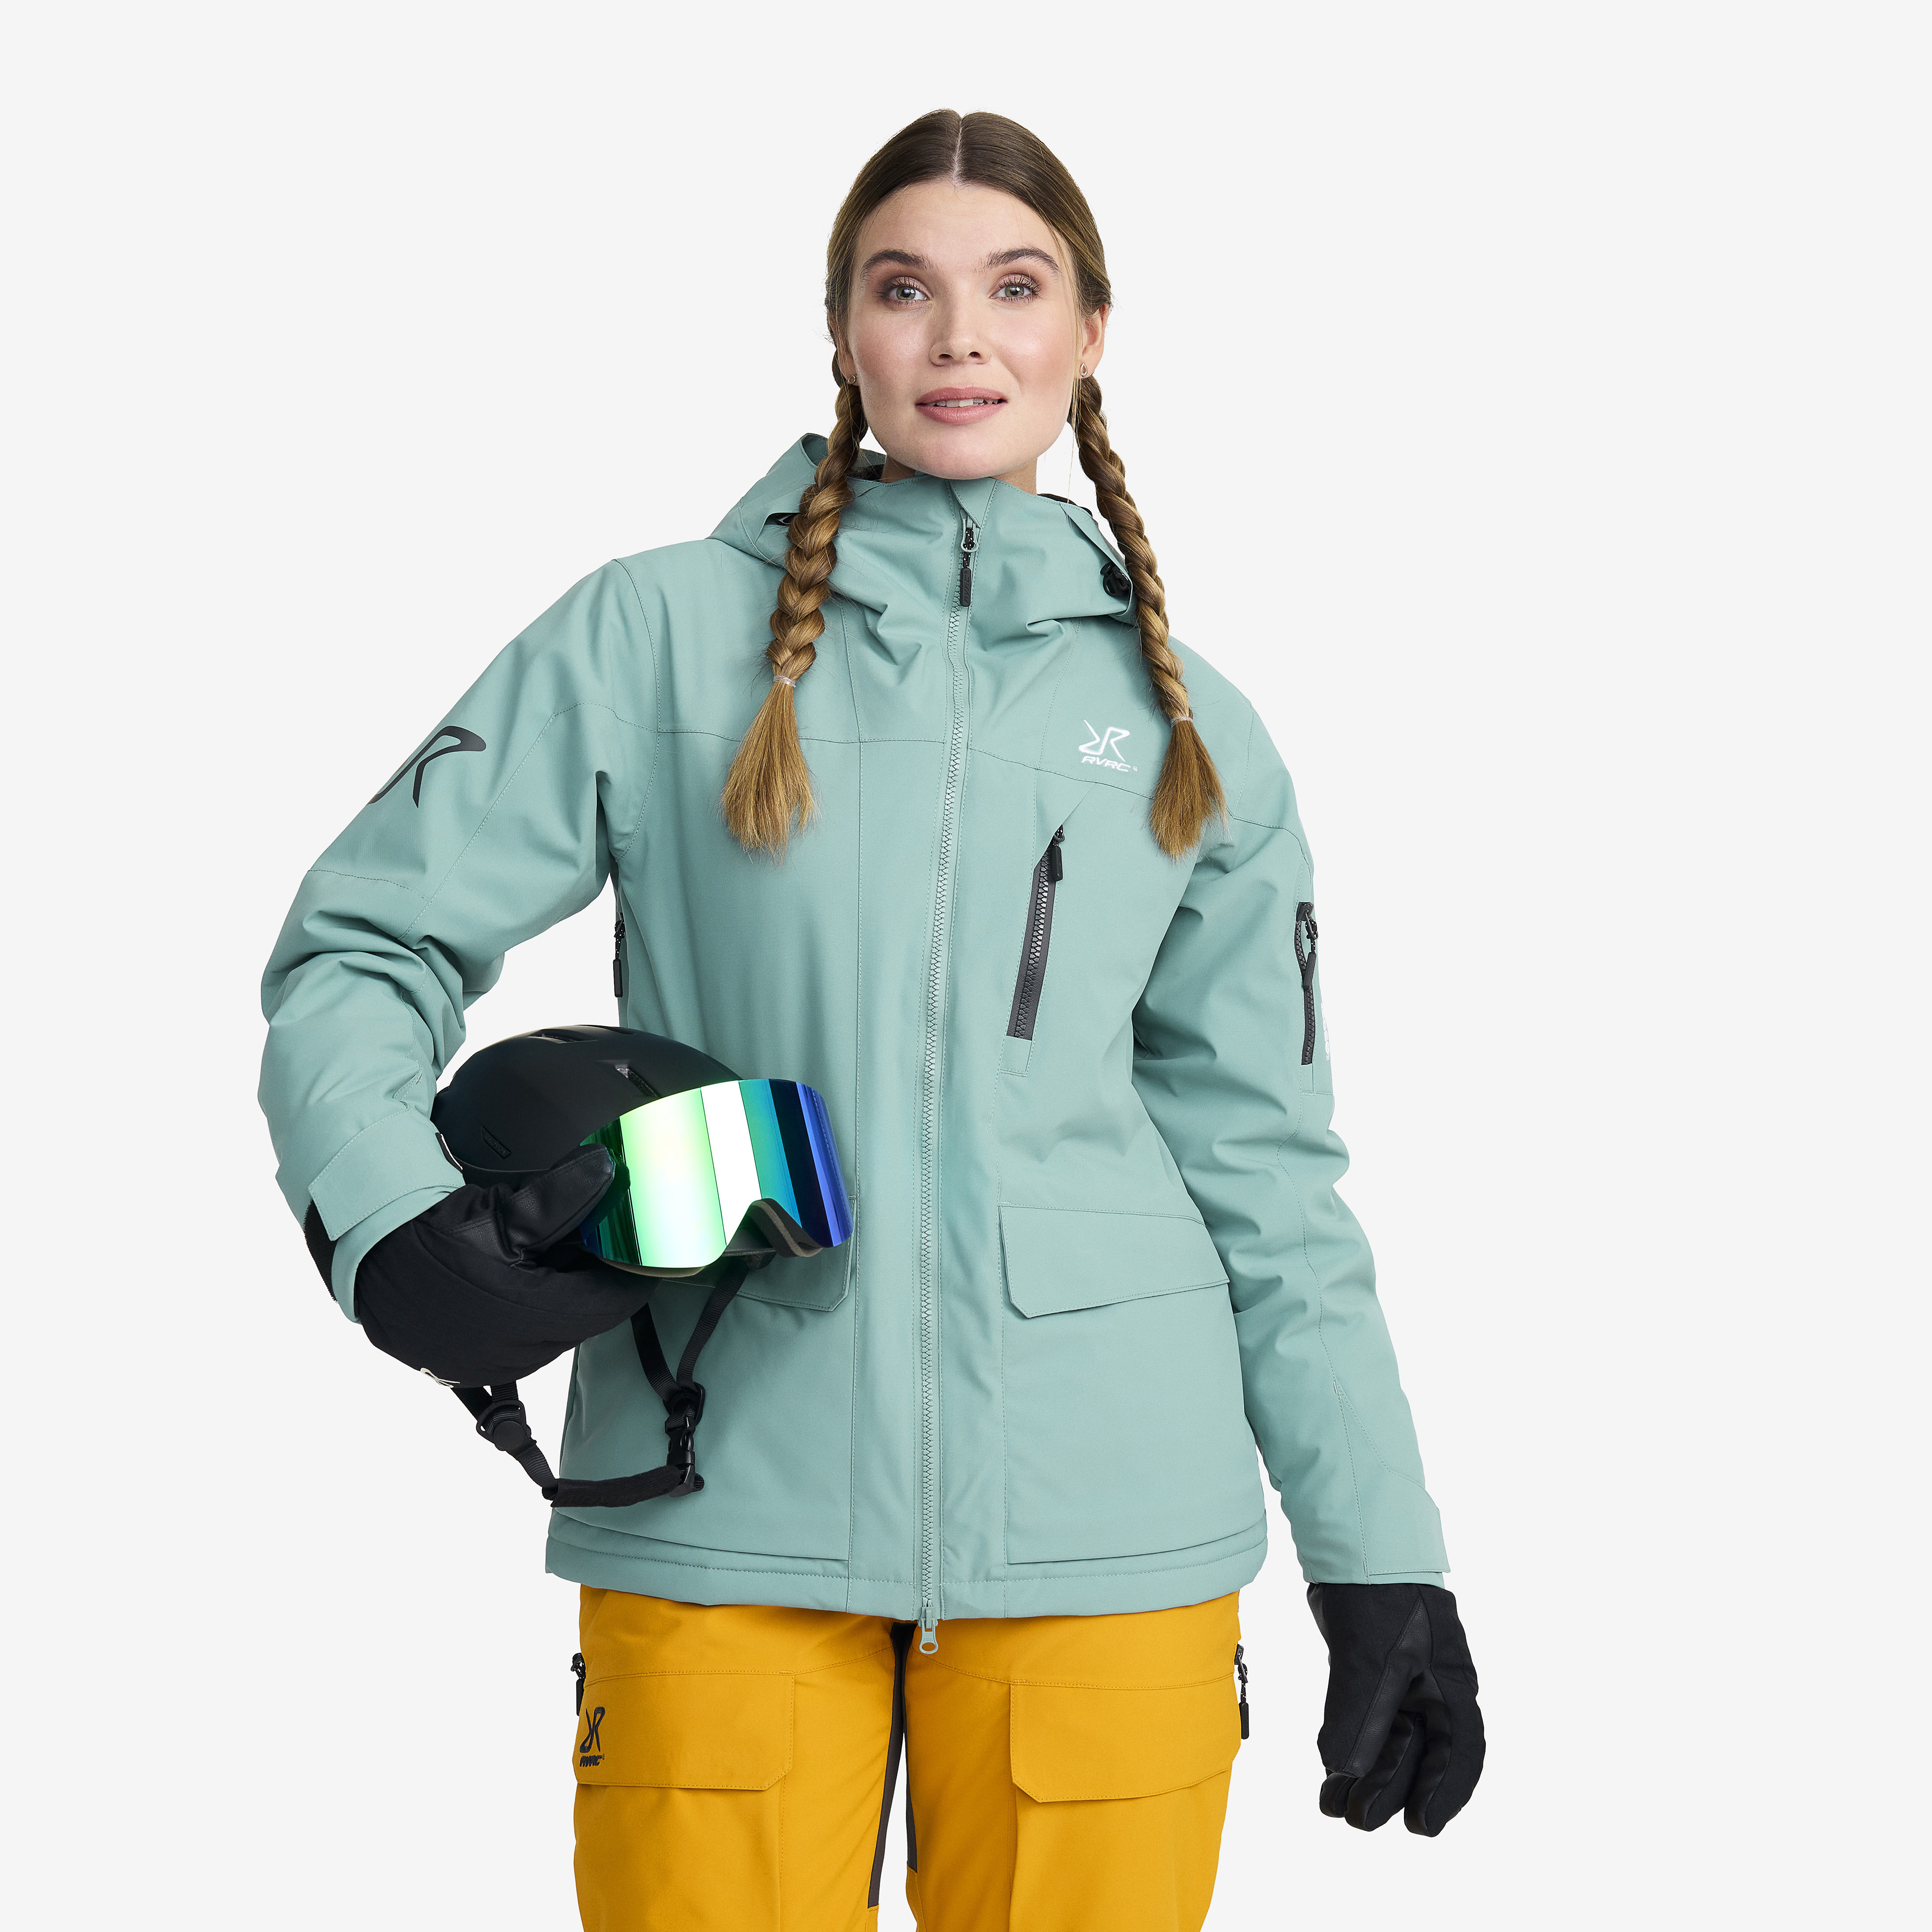 Halo 2L Insulated Ski Jacket Arctic Femme